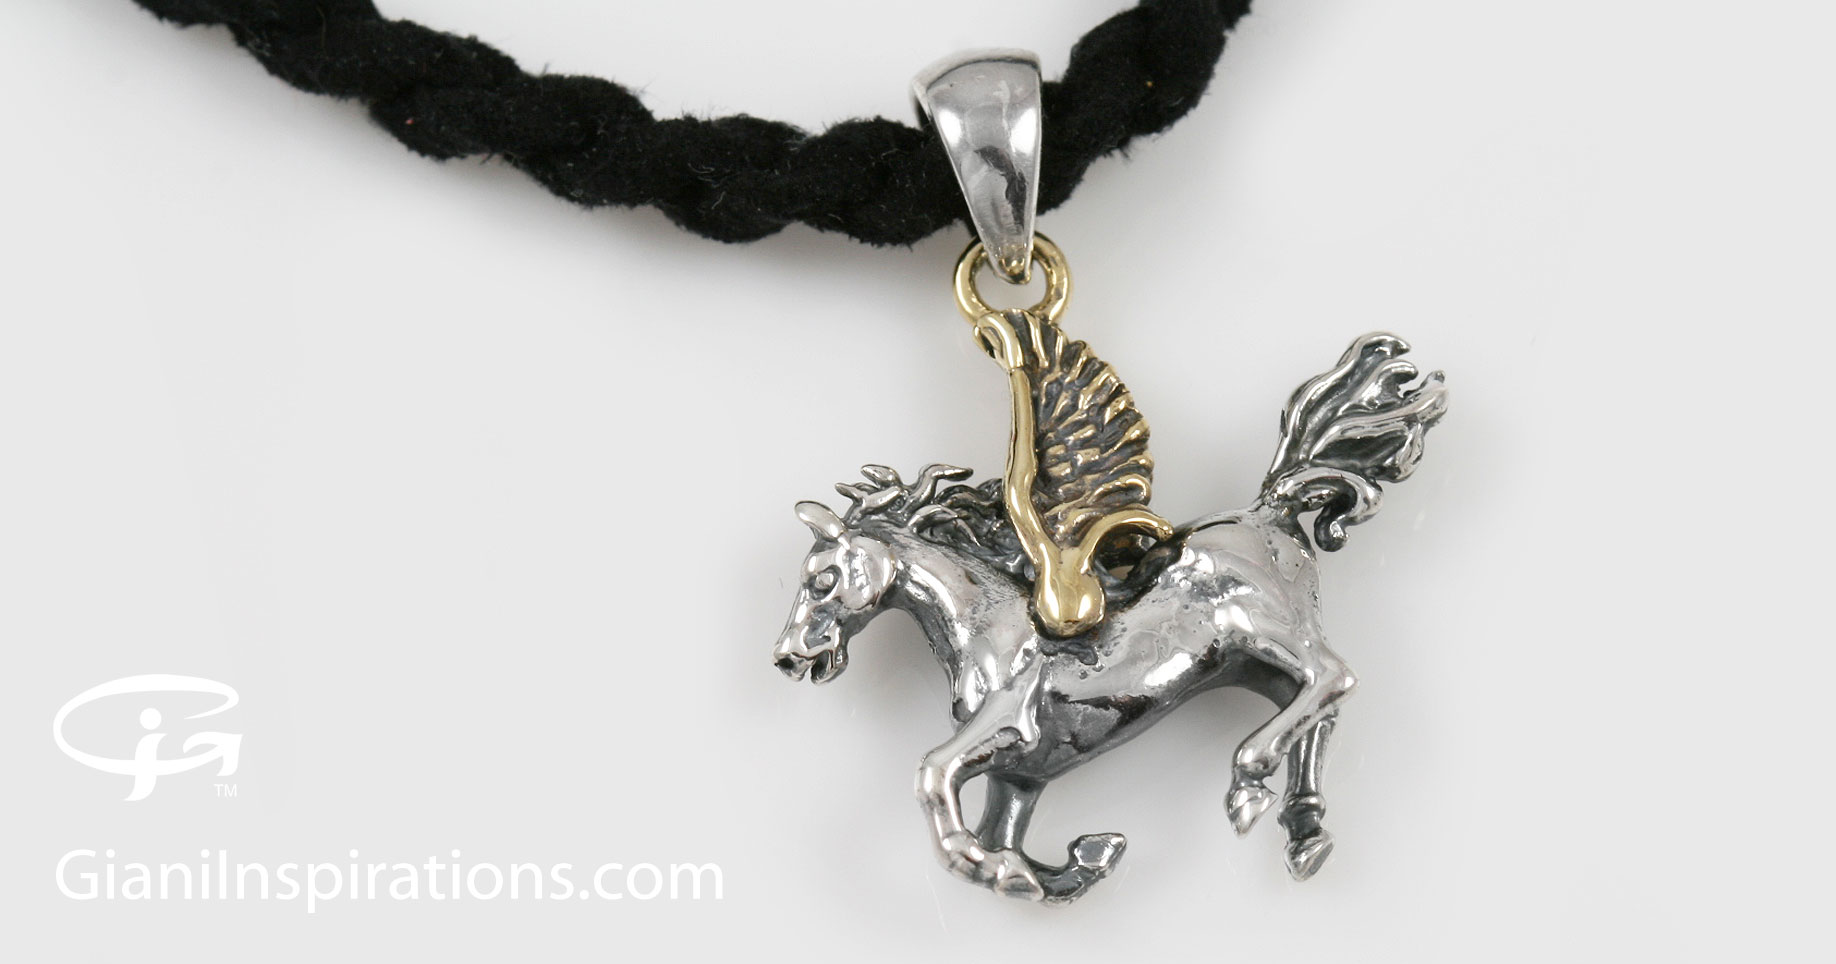 Silver Horse Head Charms | Horse Pendant | Animal Charm | Equestrian Charm | Horse Racing Jewellery DIY | Necklace Making | Bag Charm (2pcs / Tibetan